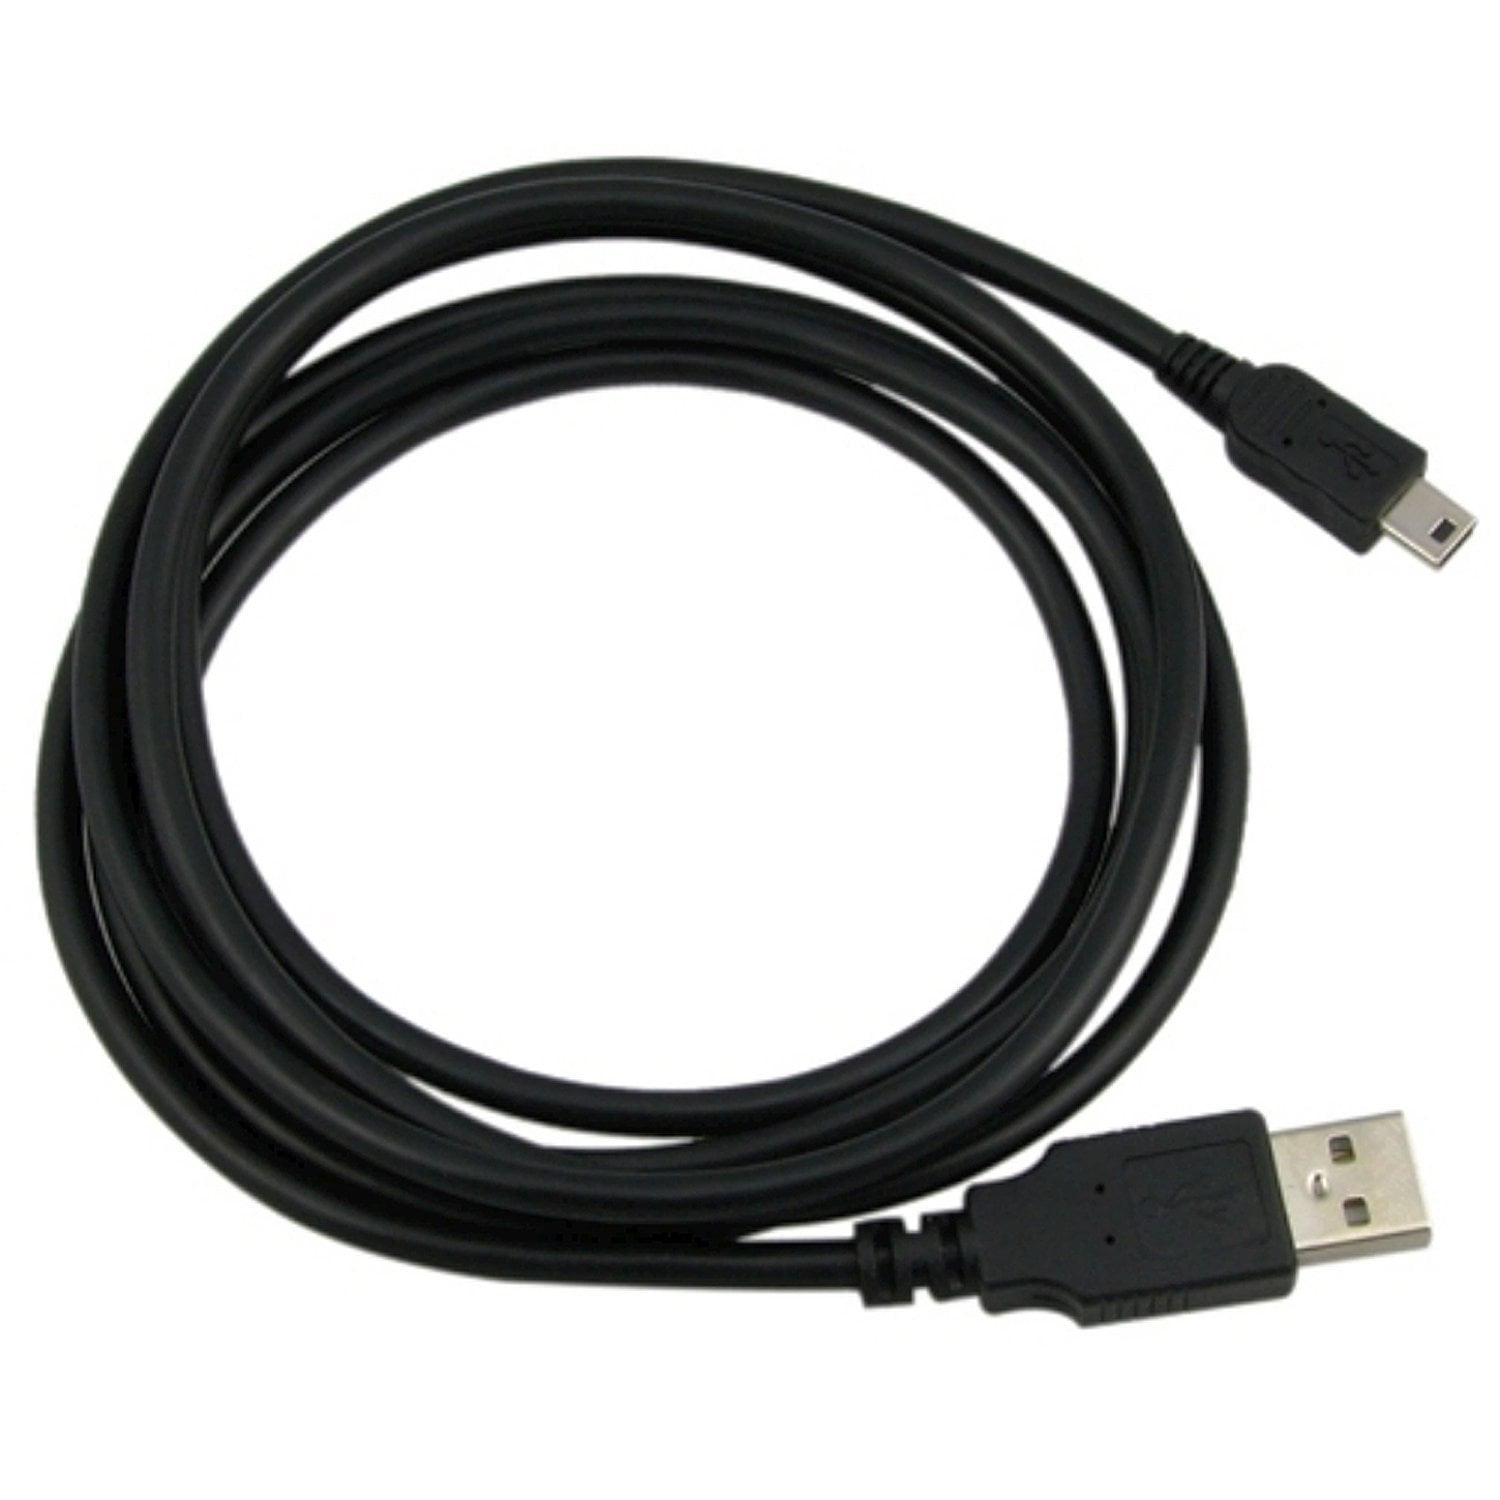 For Sony NEX-3N NEX-F5 NEX-6L NEX-6 USB Cable Charging Cord Data Lead Wire 